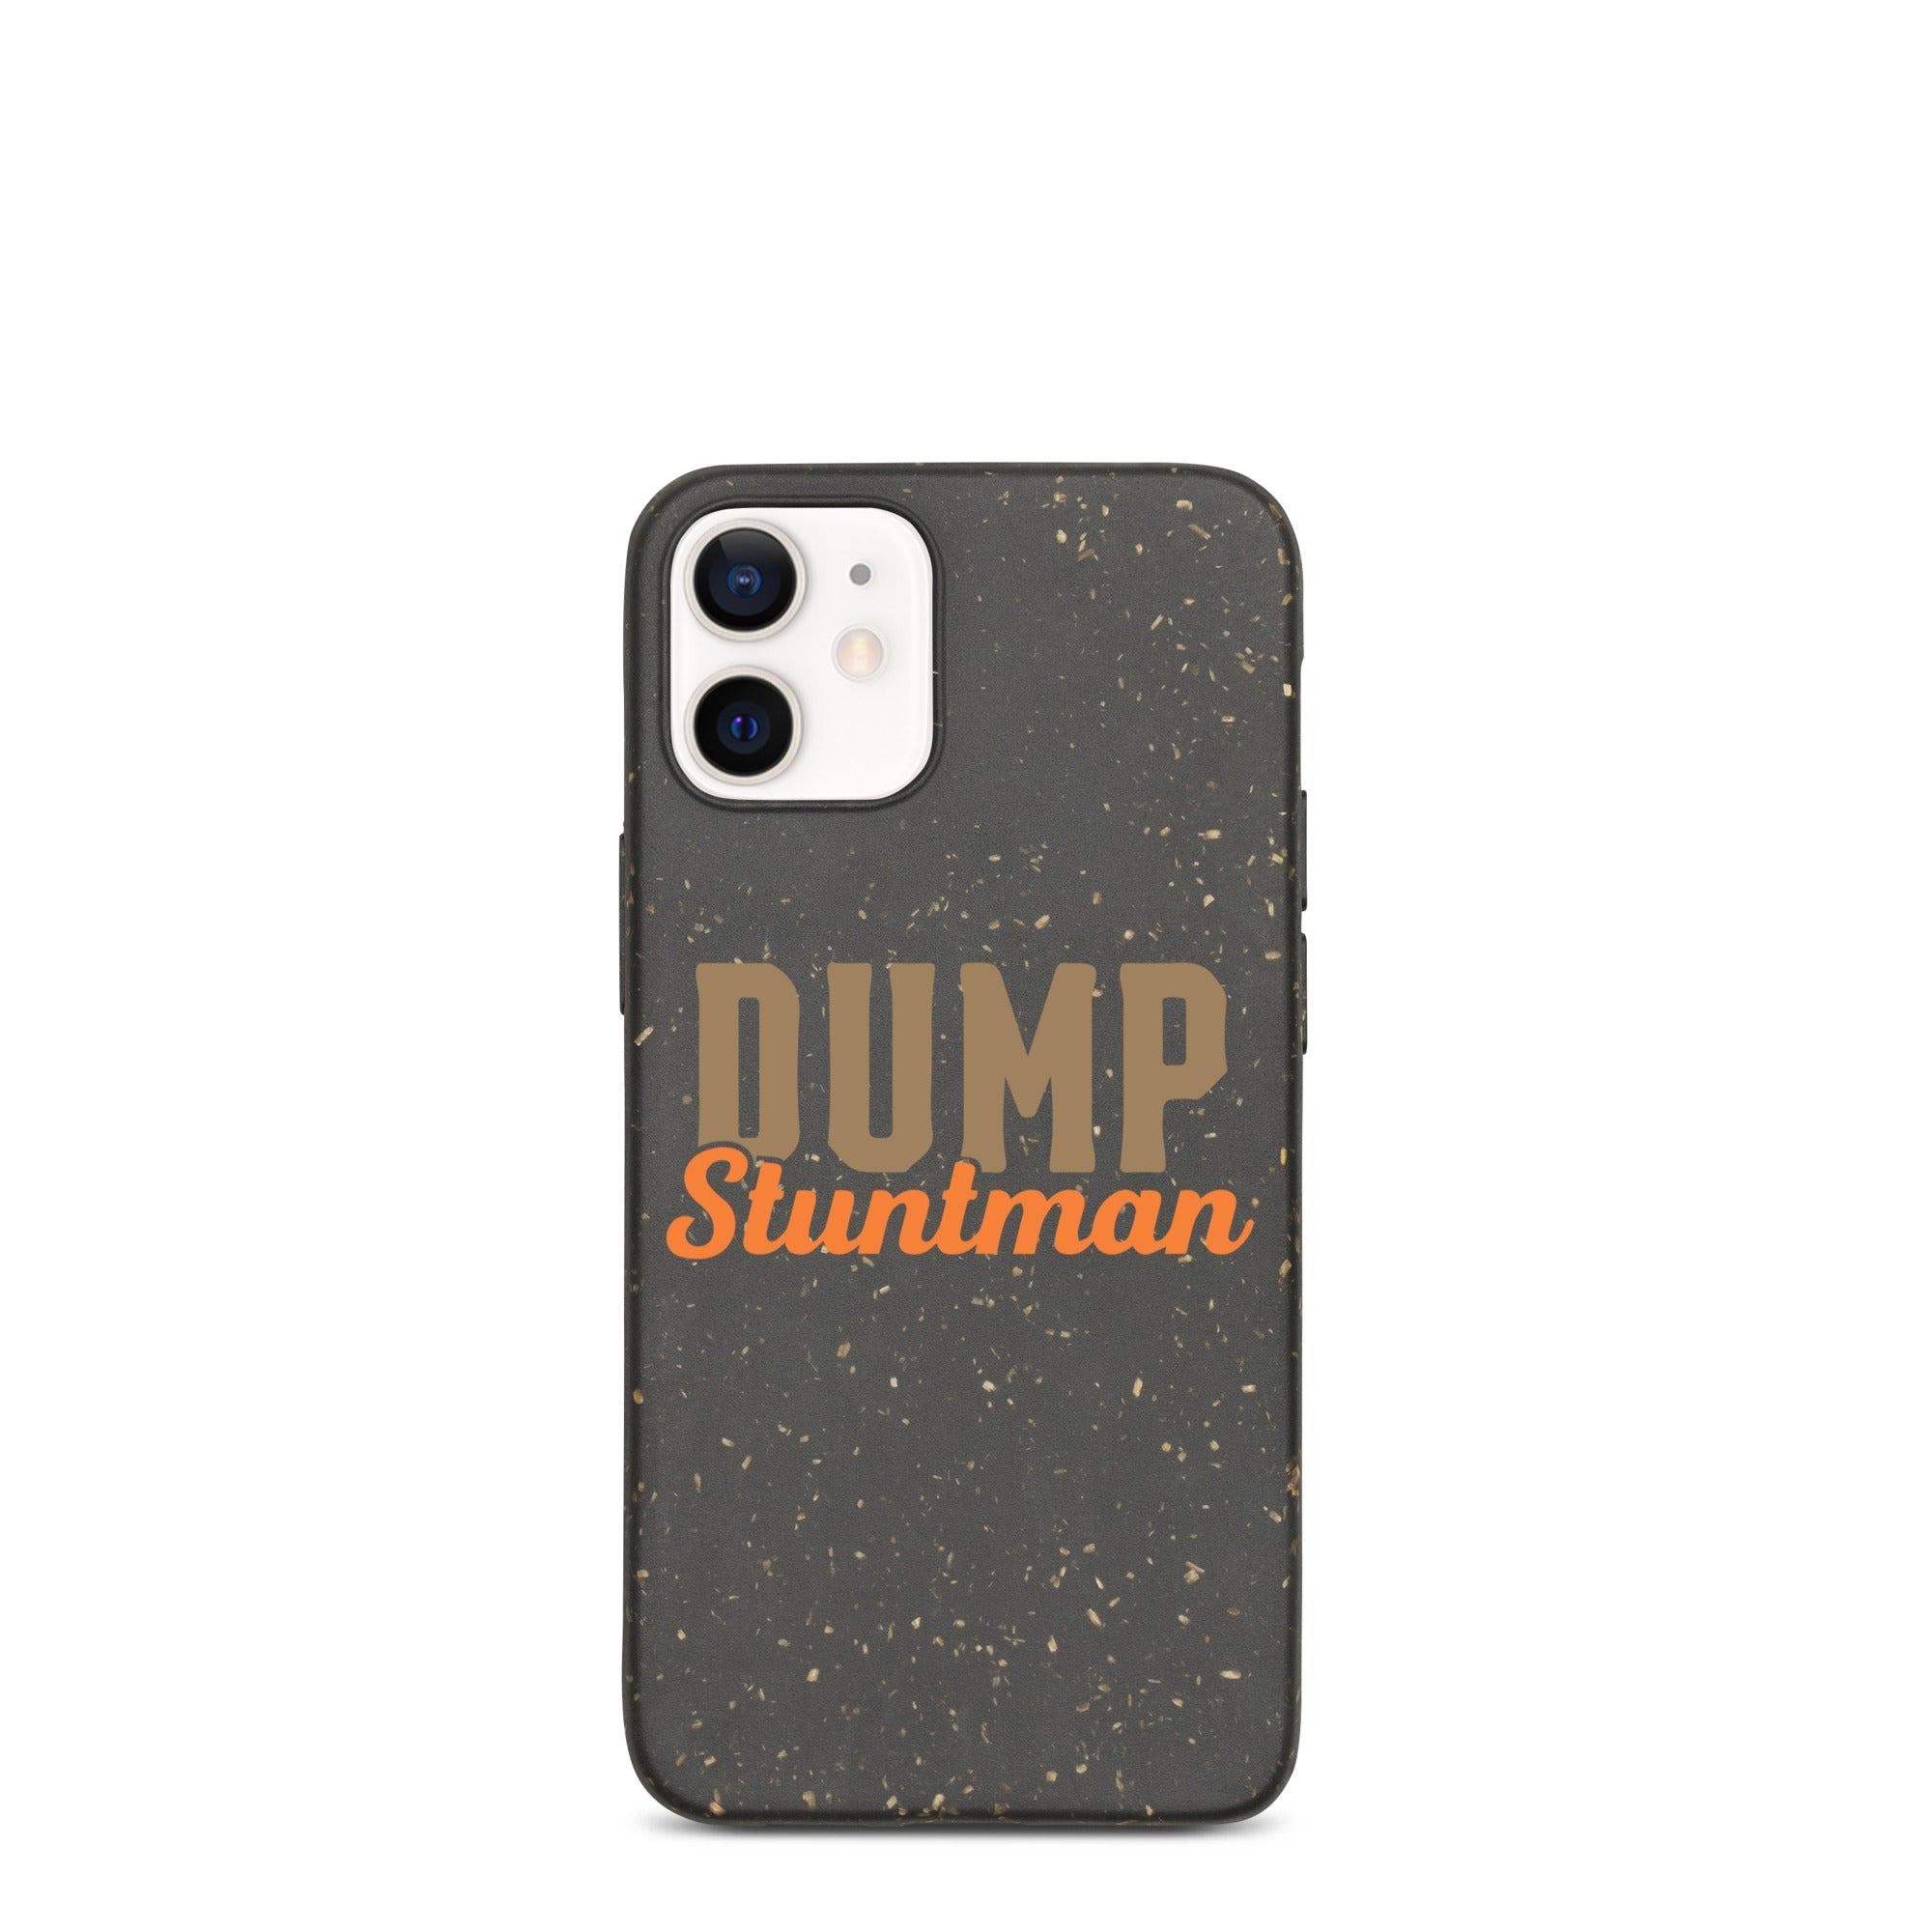 Dump Stuntman Speckled iPhone case